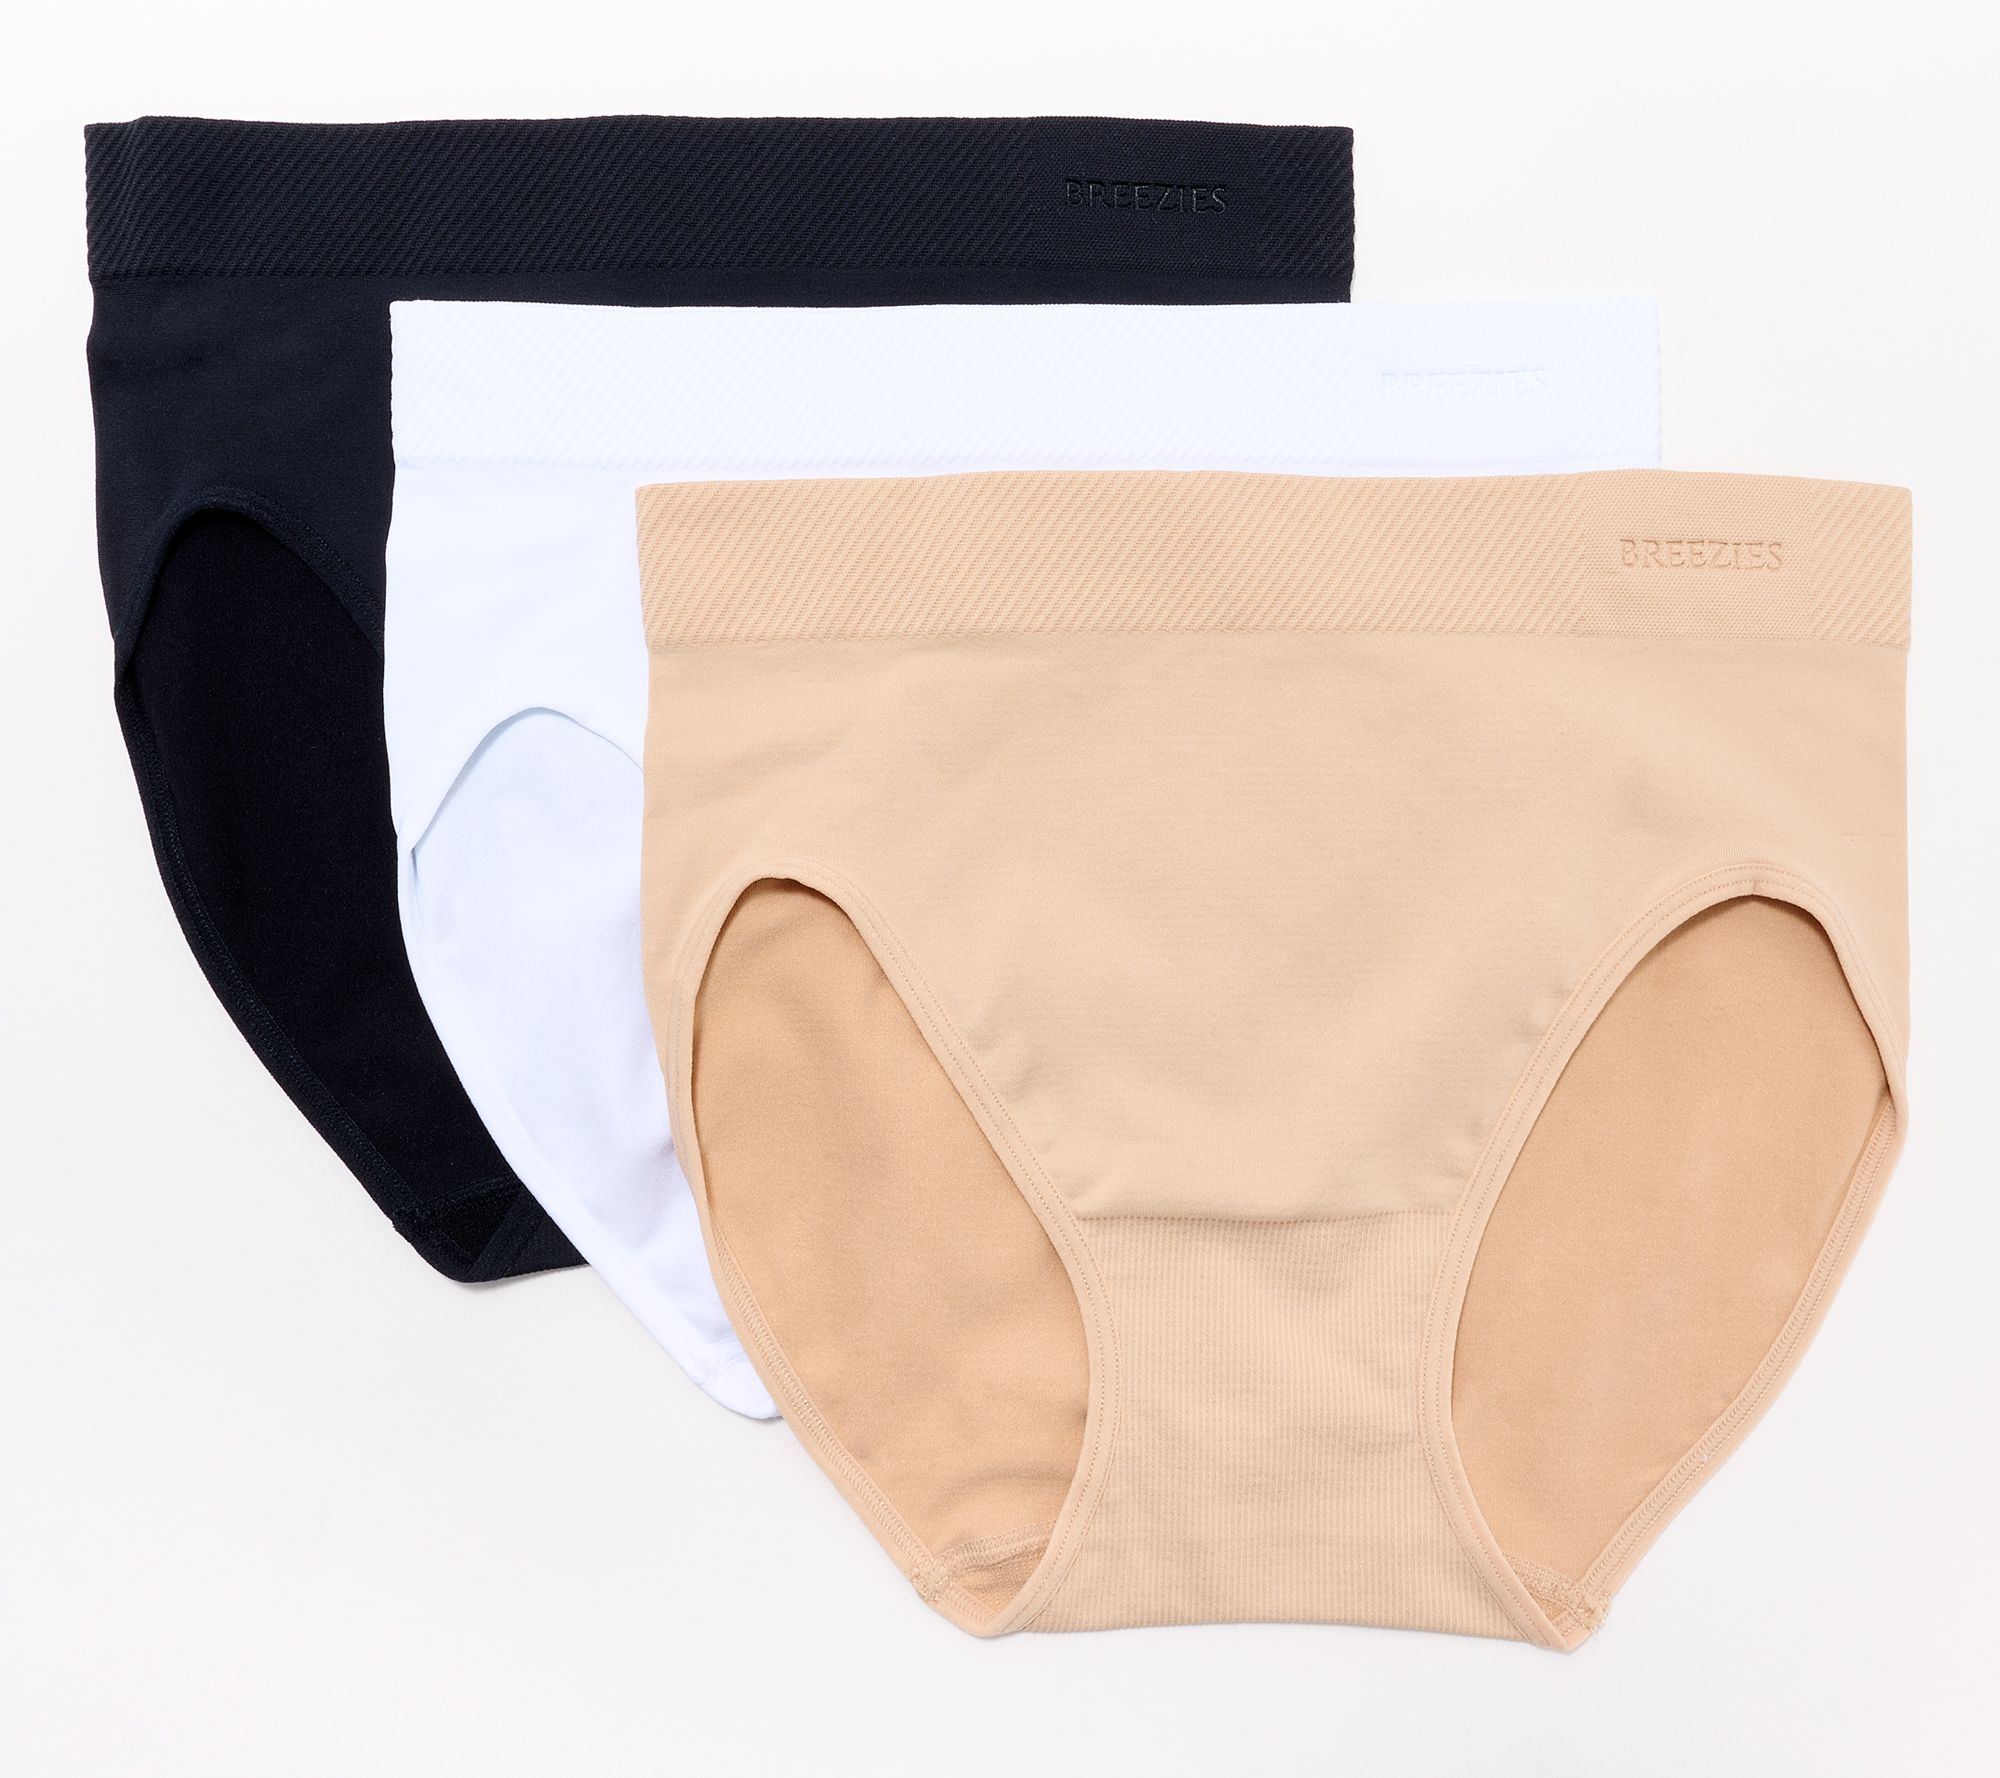  Take Talk 5 Pack Seamless Underwear for Women High Cut